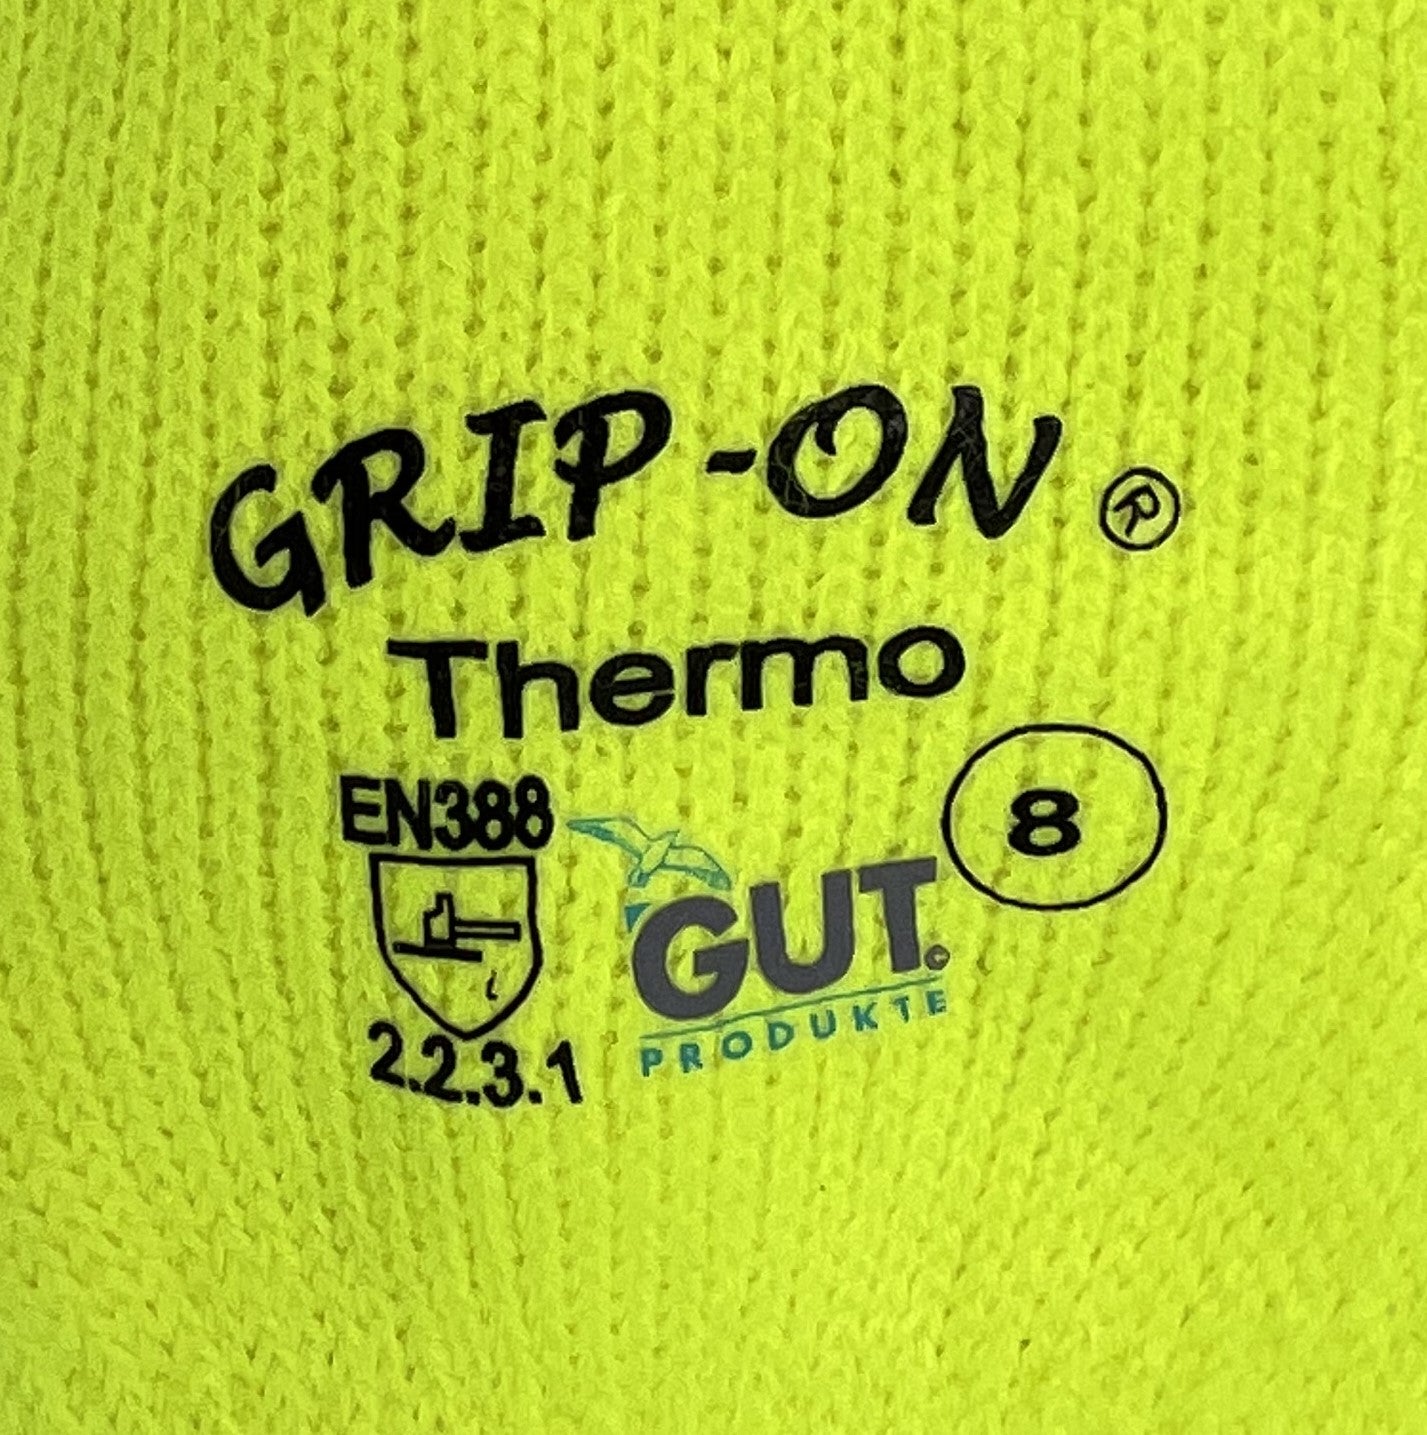 Strickhandschuh GUT GRIP-ON Thermo gelb